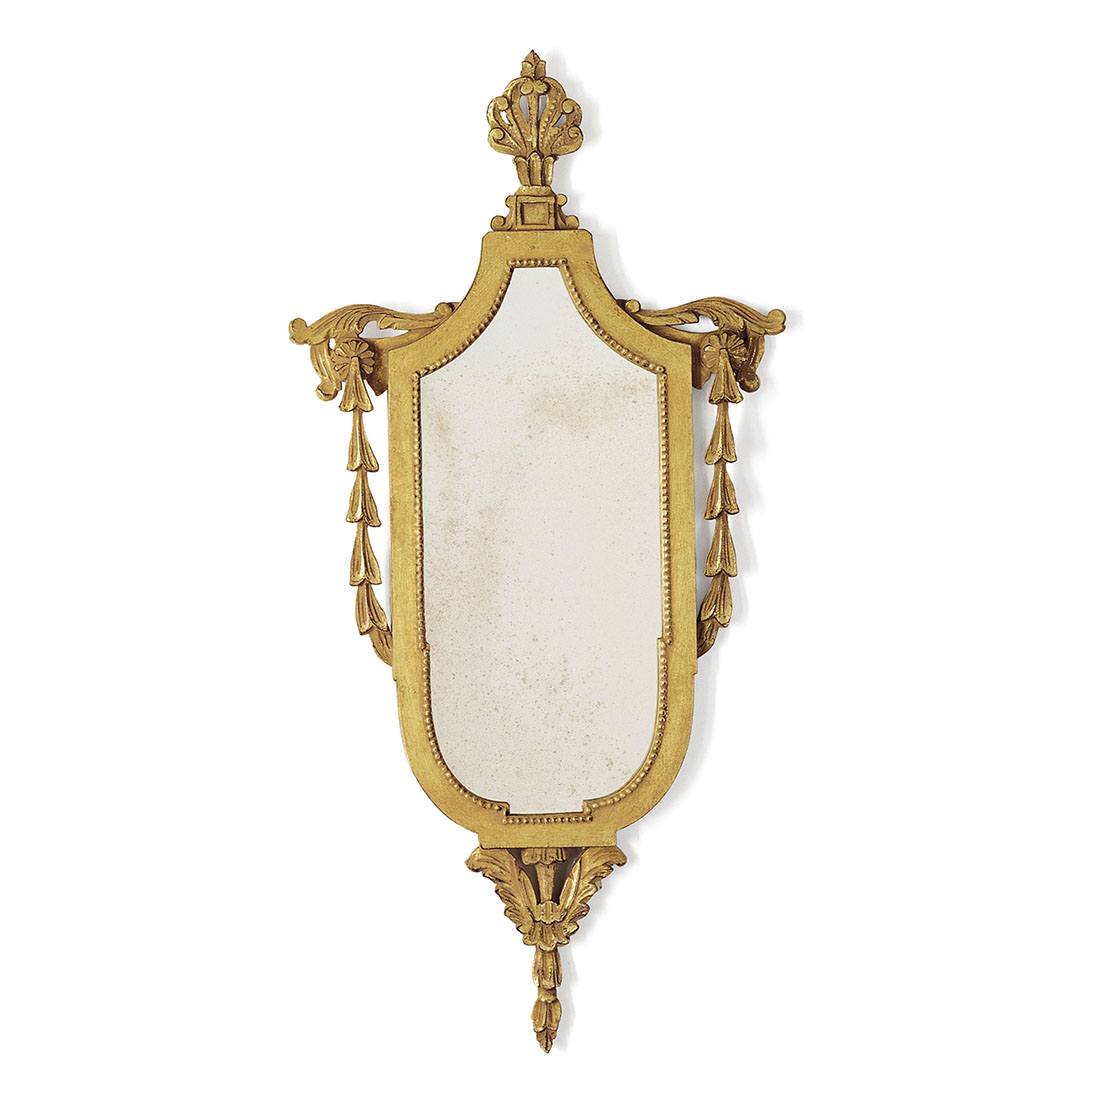 Grecian mirror in Burnt gold - Beaumont & Fletcher